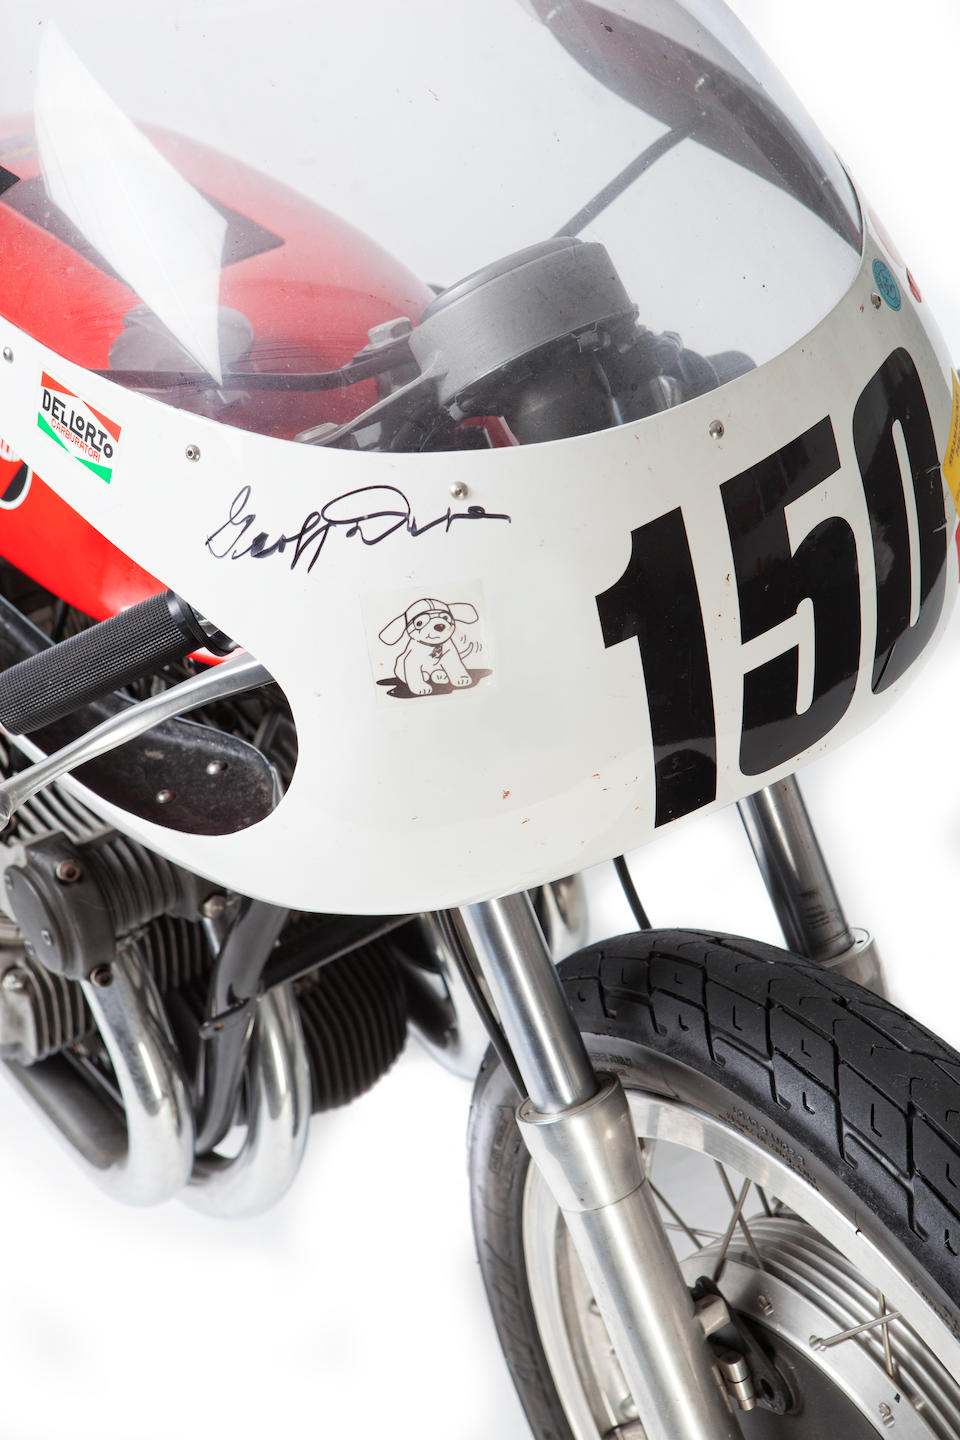 Gilera 500cc Grand Prix Racing Motorcycle Re-creation by Kay Engineering Frame no. 508 Engine no. 508